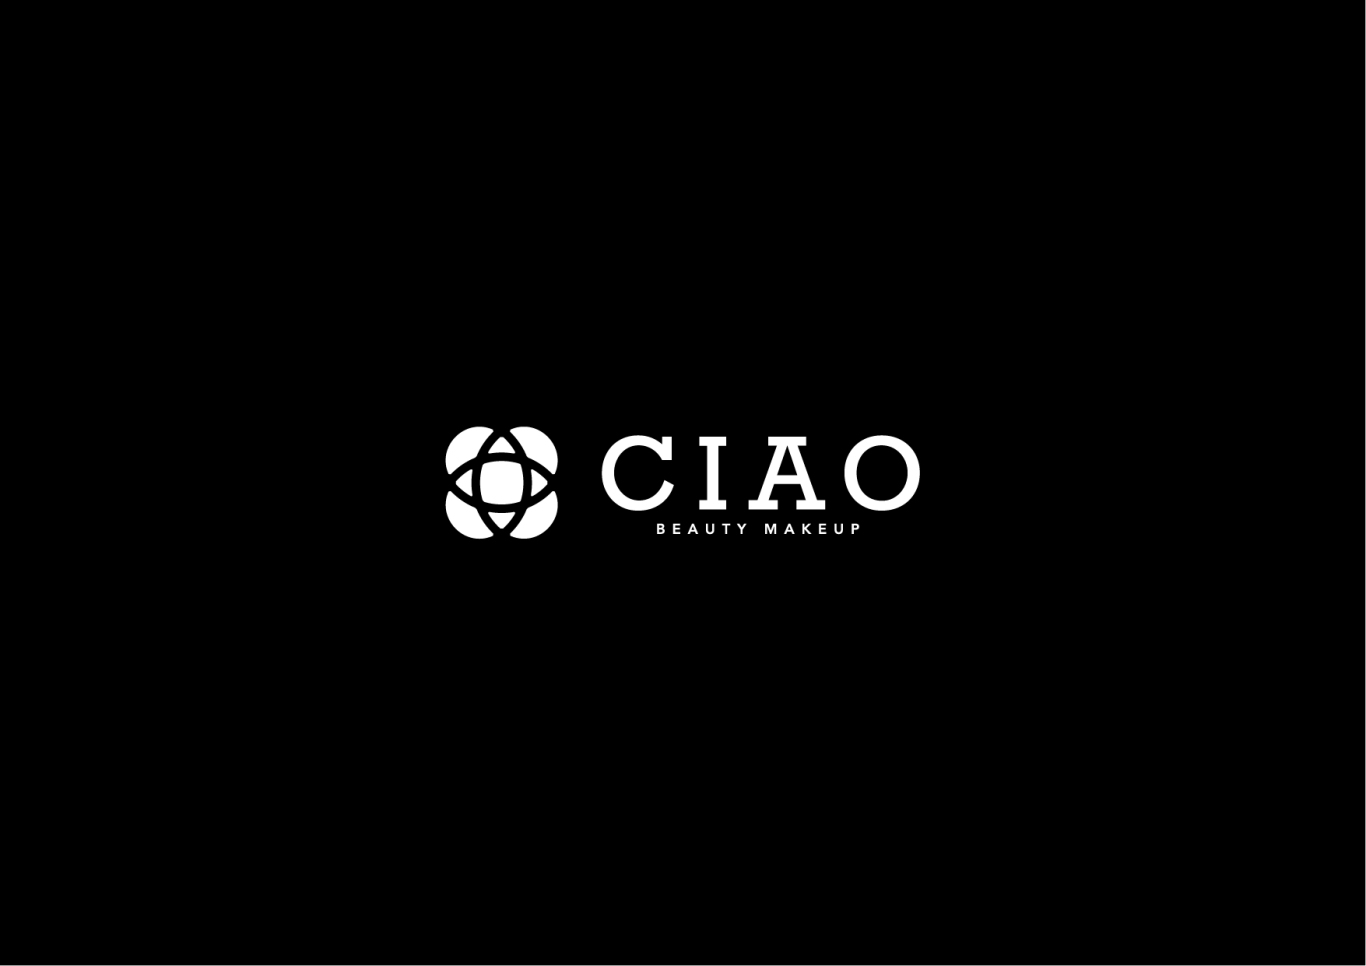 Ciao美妝logo設計圖17